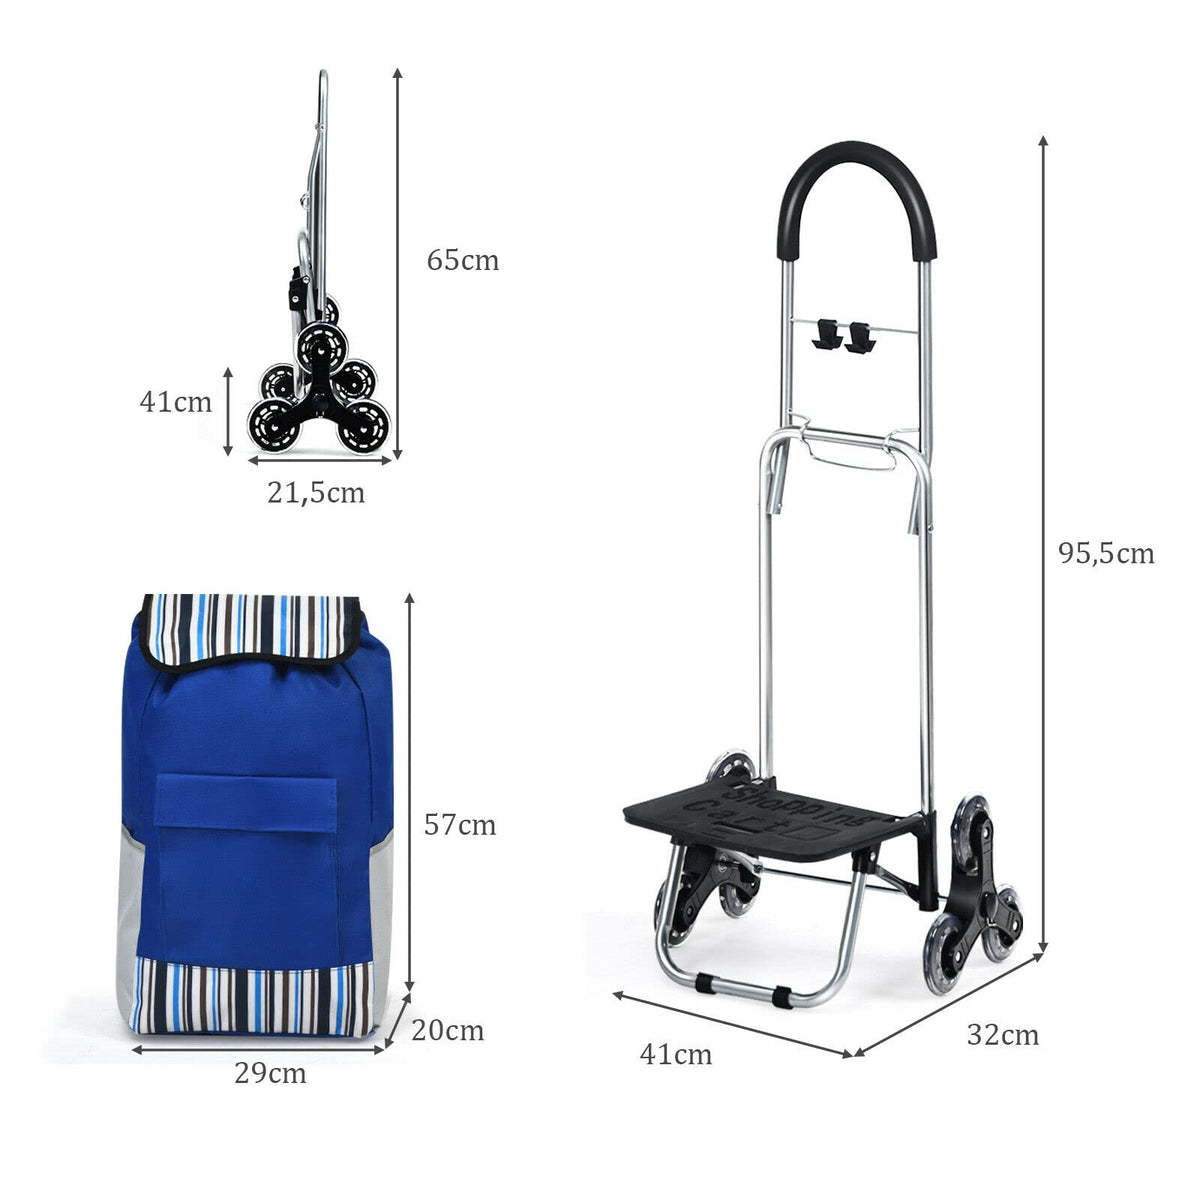 Giantex Folding Shopping Trolley Dolly, Rolling Utility Bag Cart w/ 2 Wheels, Solid Aluminum Frame, Blue & Black